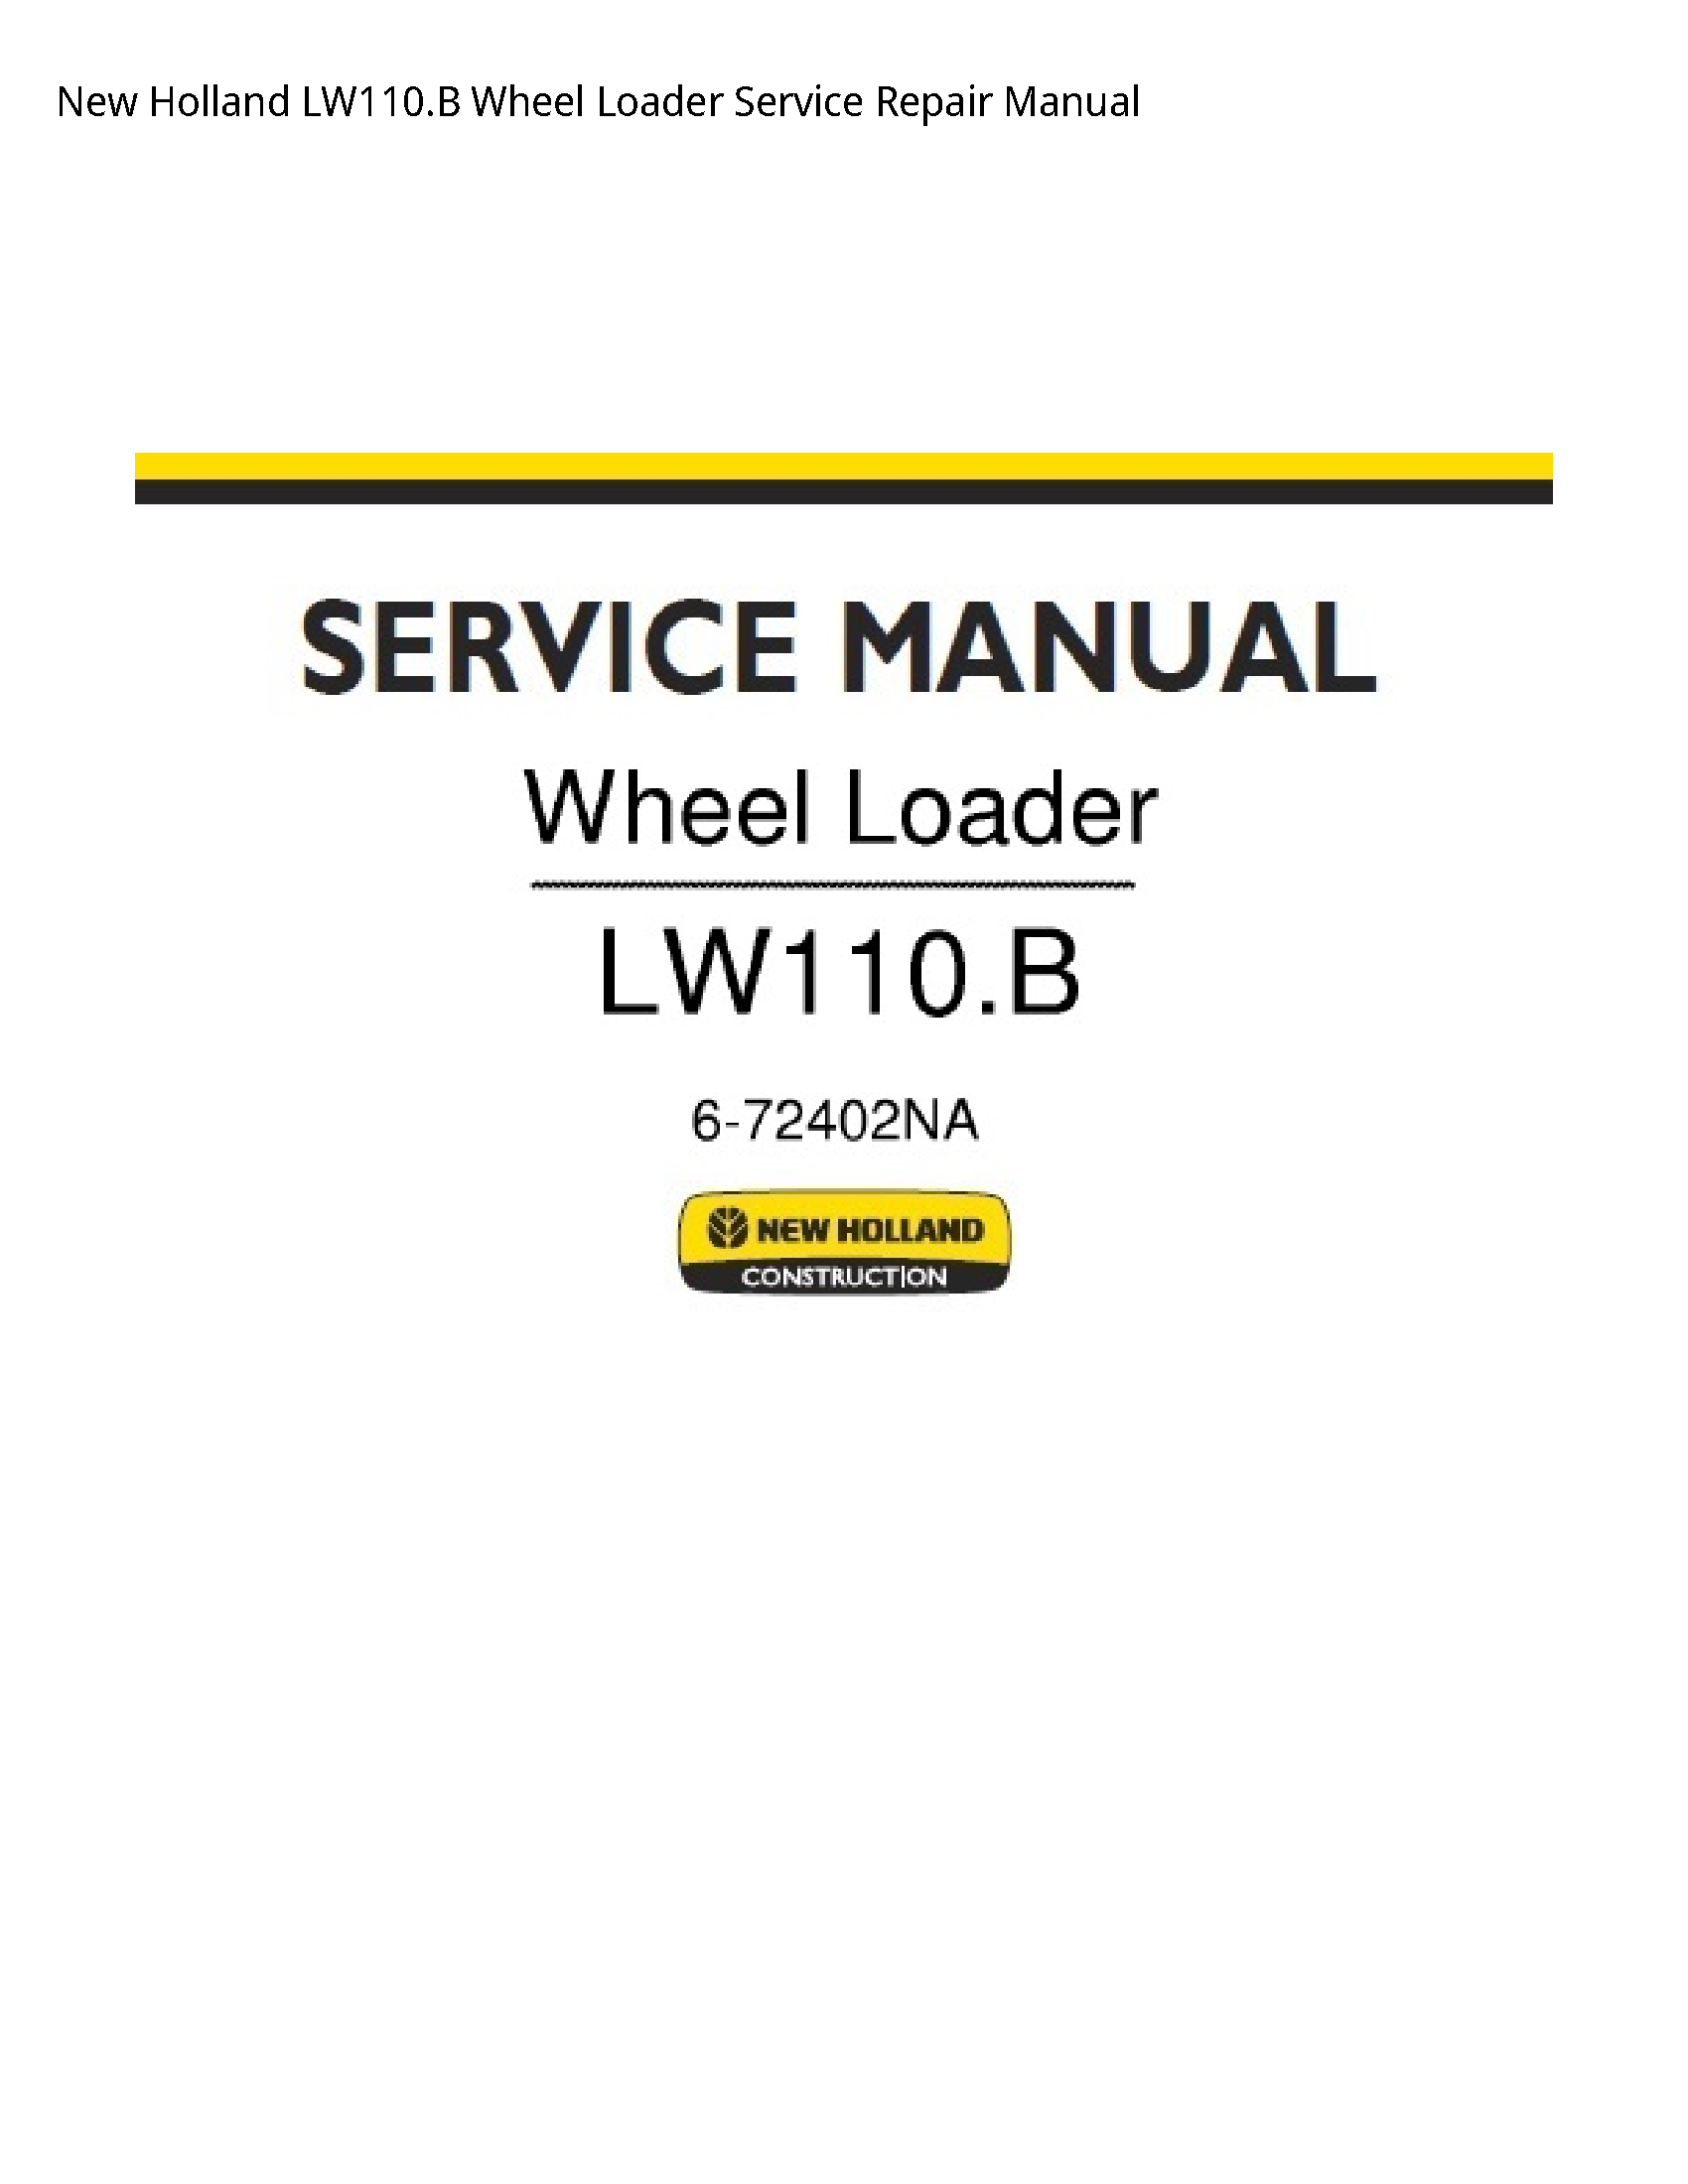 New Holland LW110.B Wheel Loader manual